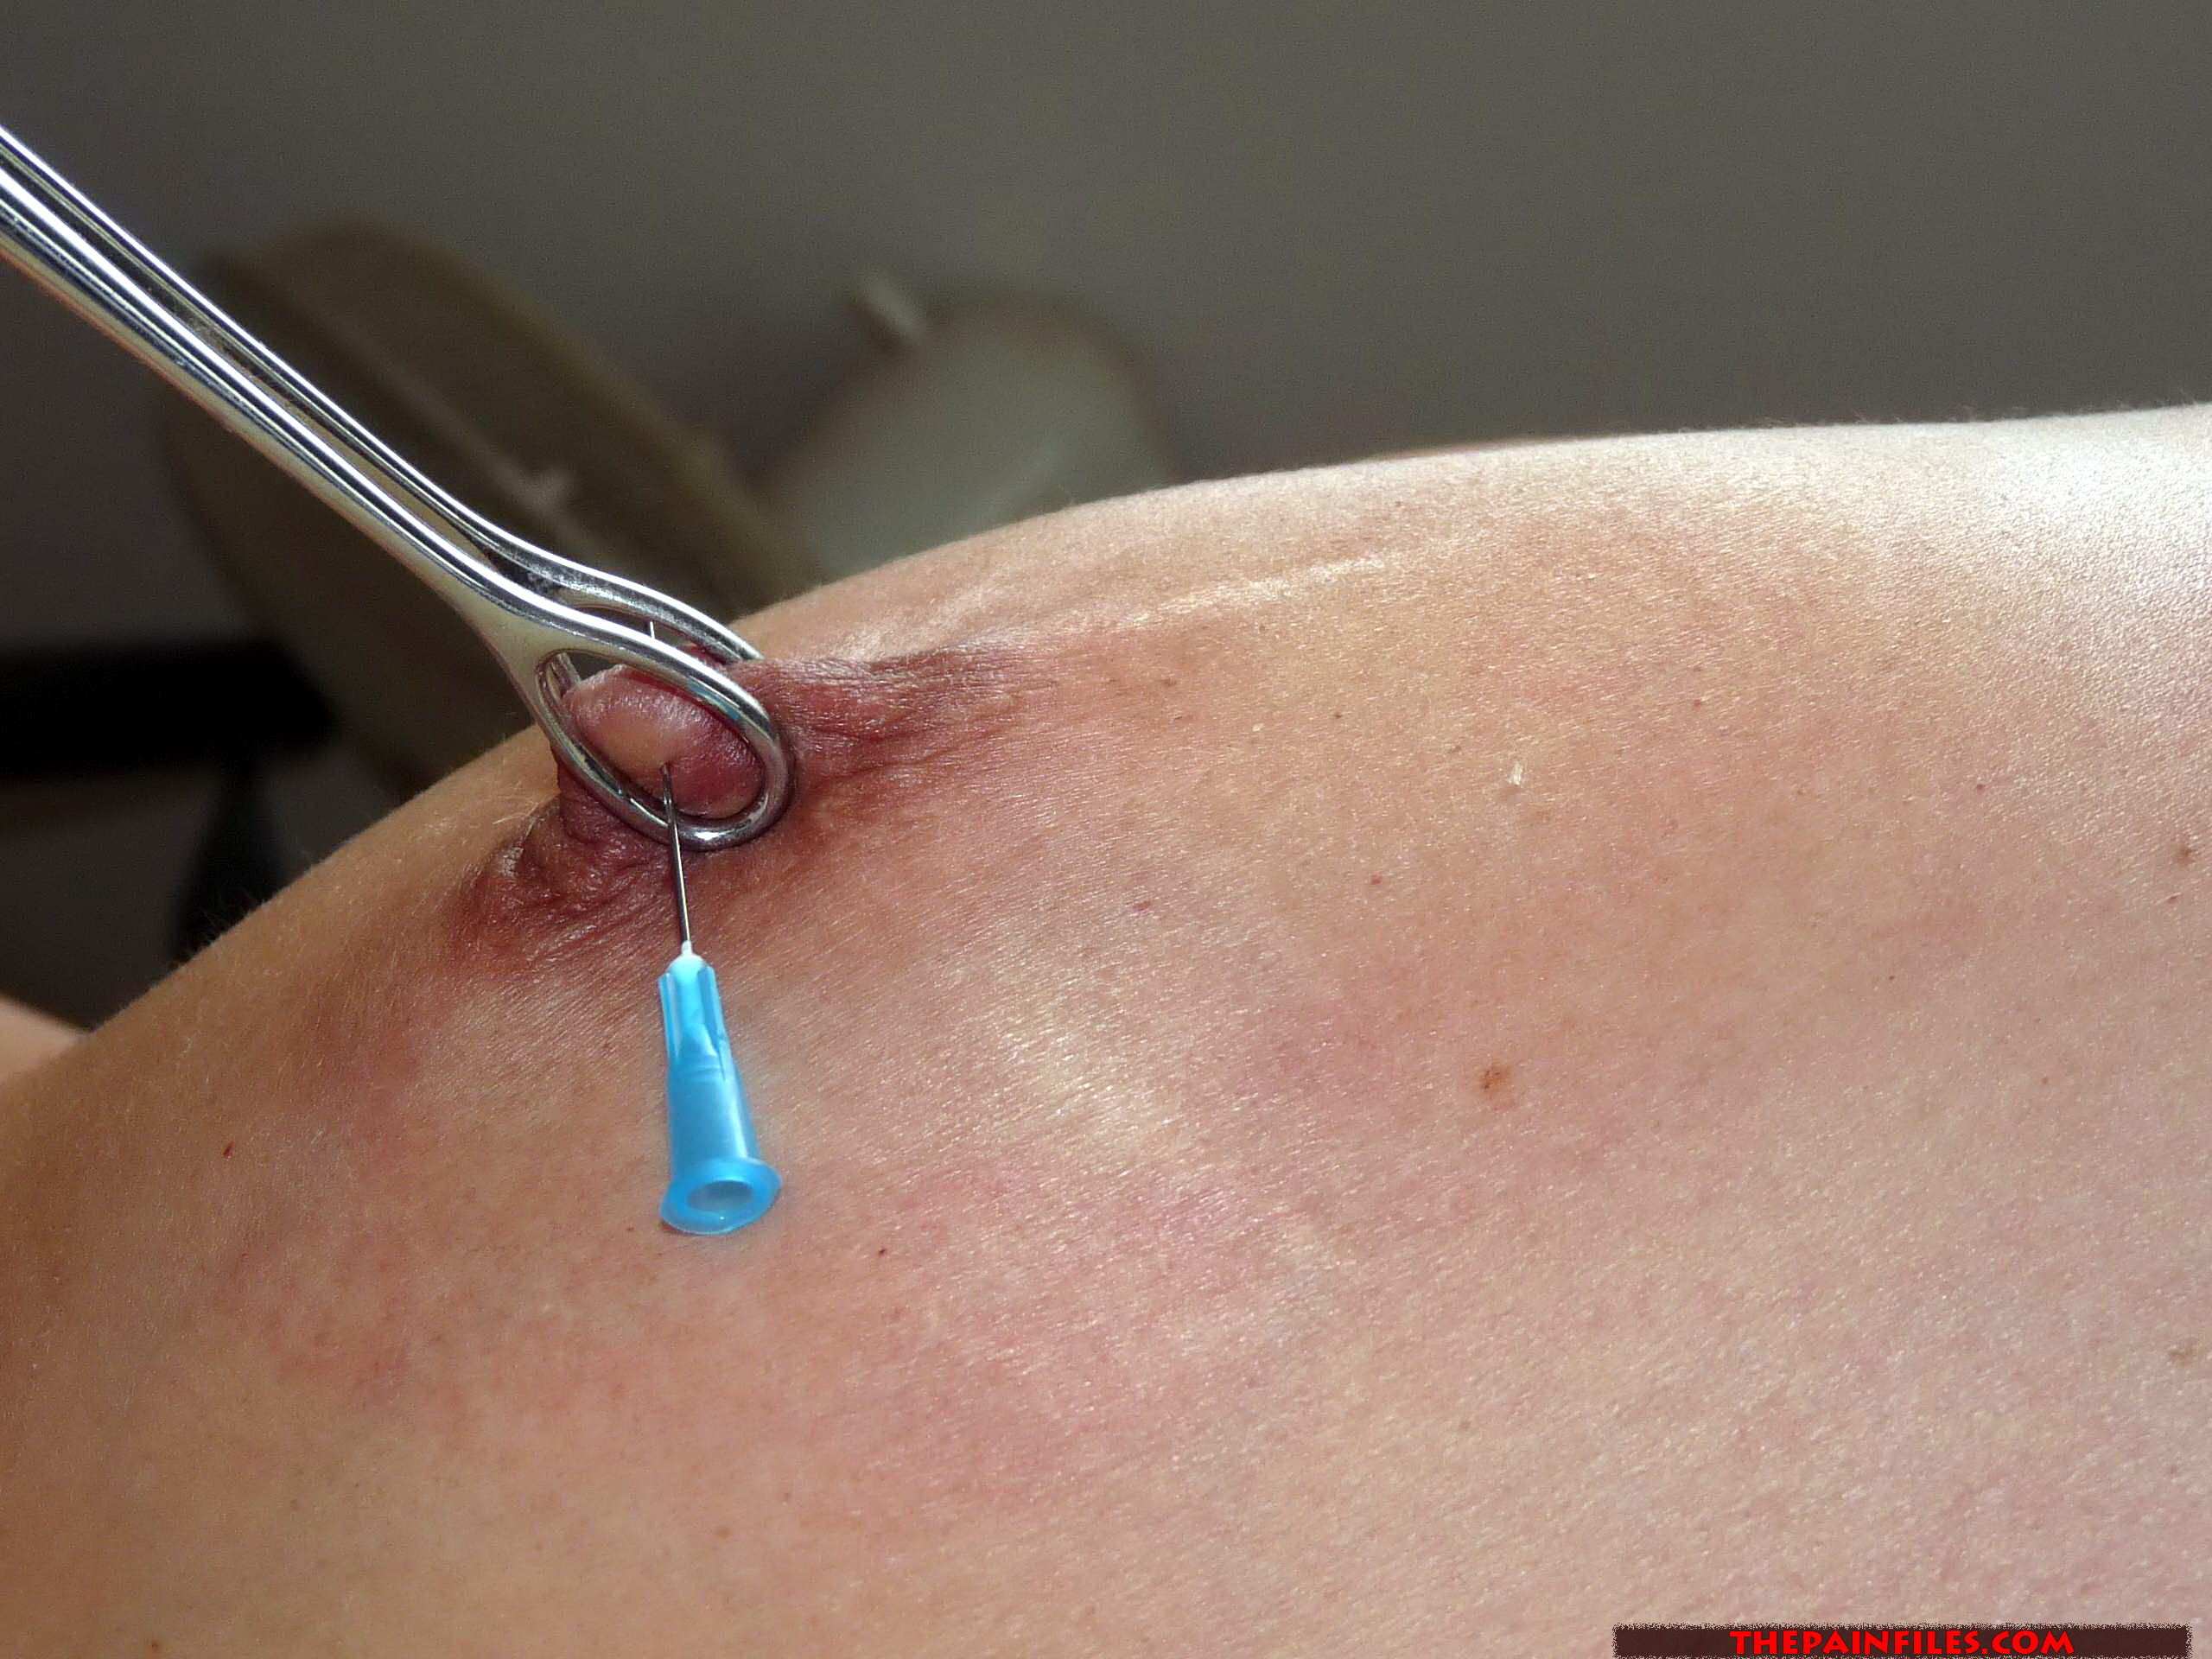 Needle Bdsm - Belgian Needle BDSM